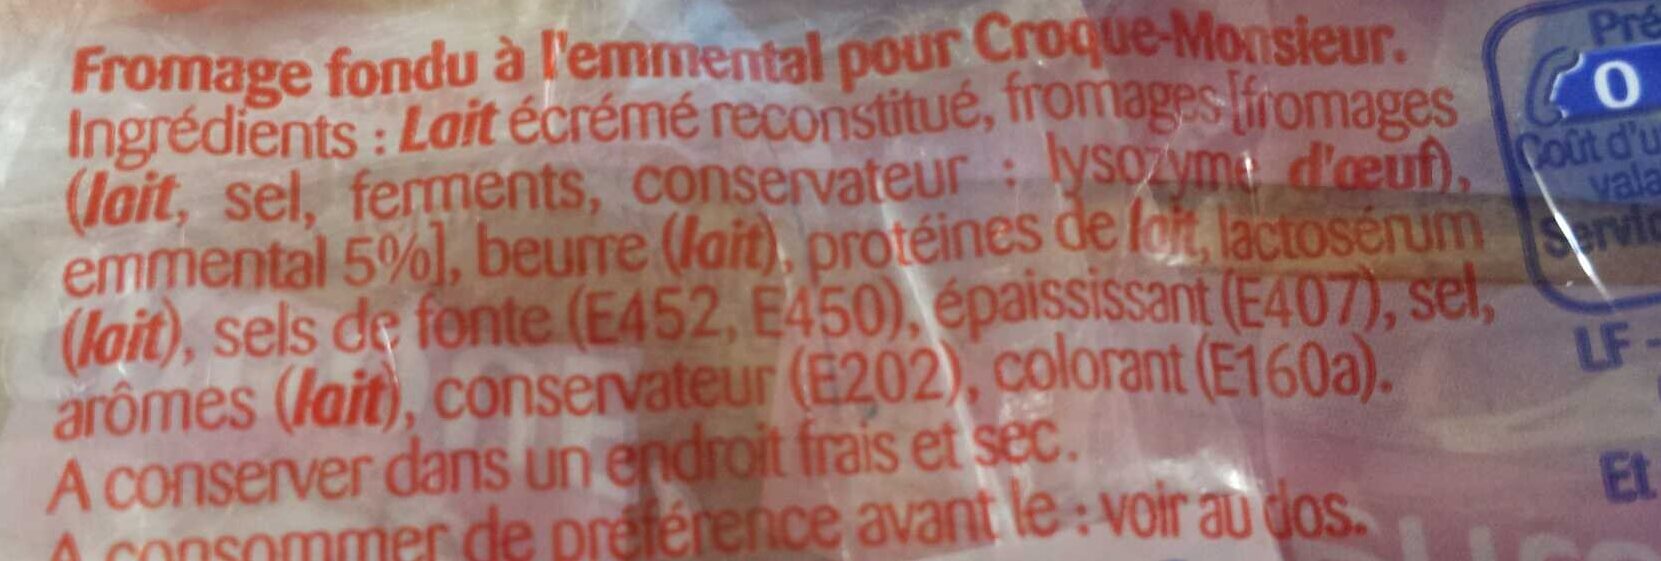 PRESIDENT CROQUE EMMENTAL 12 TRANCHES 200g - Ingredienser - fr